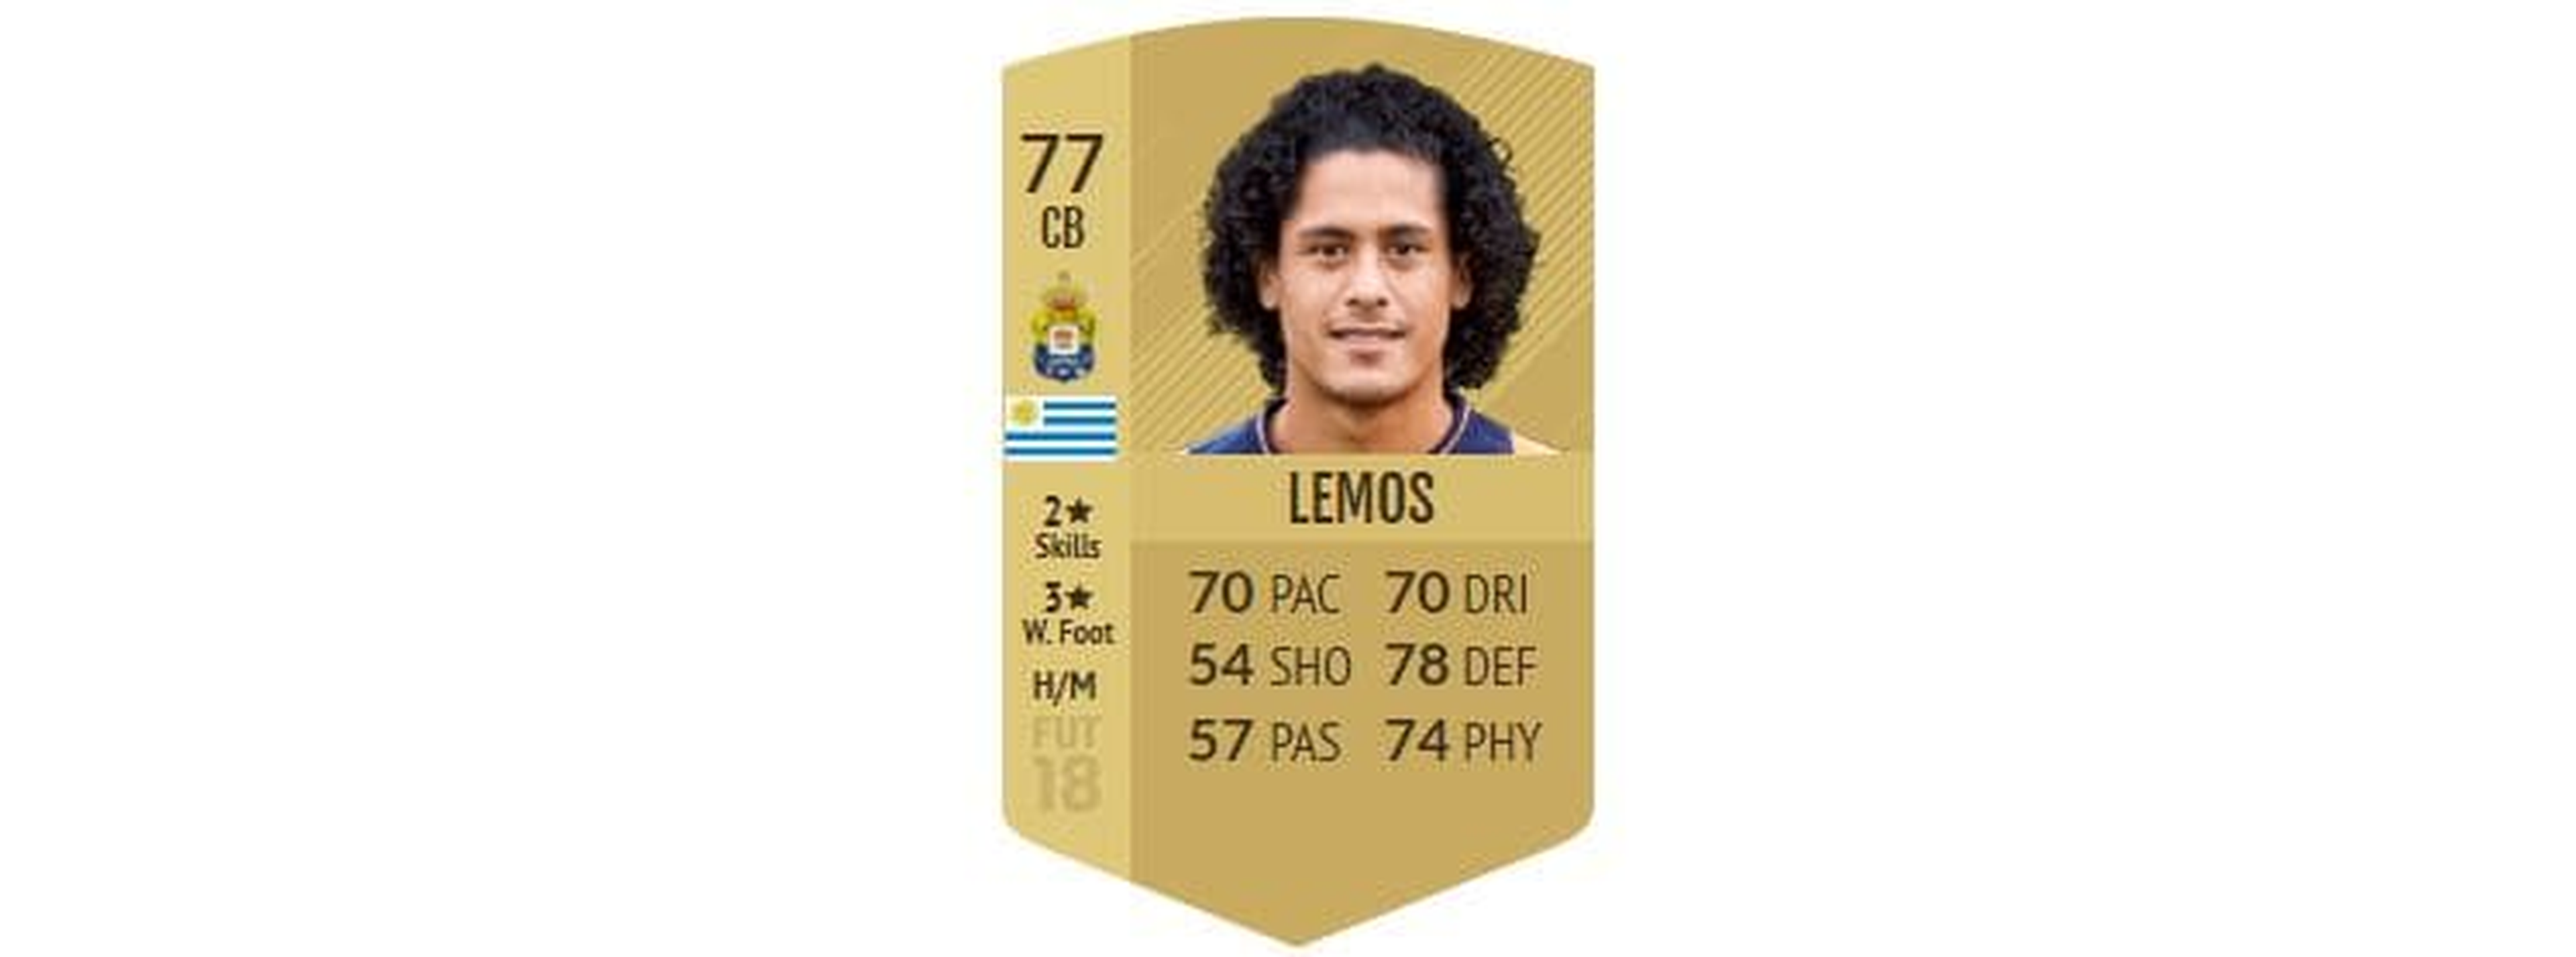 FIFA 18 - Lemos